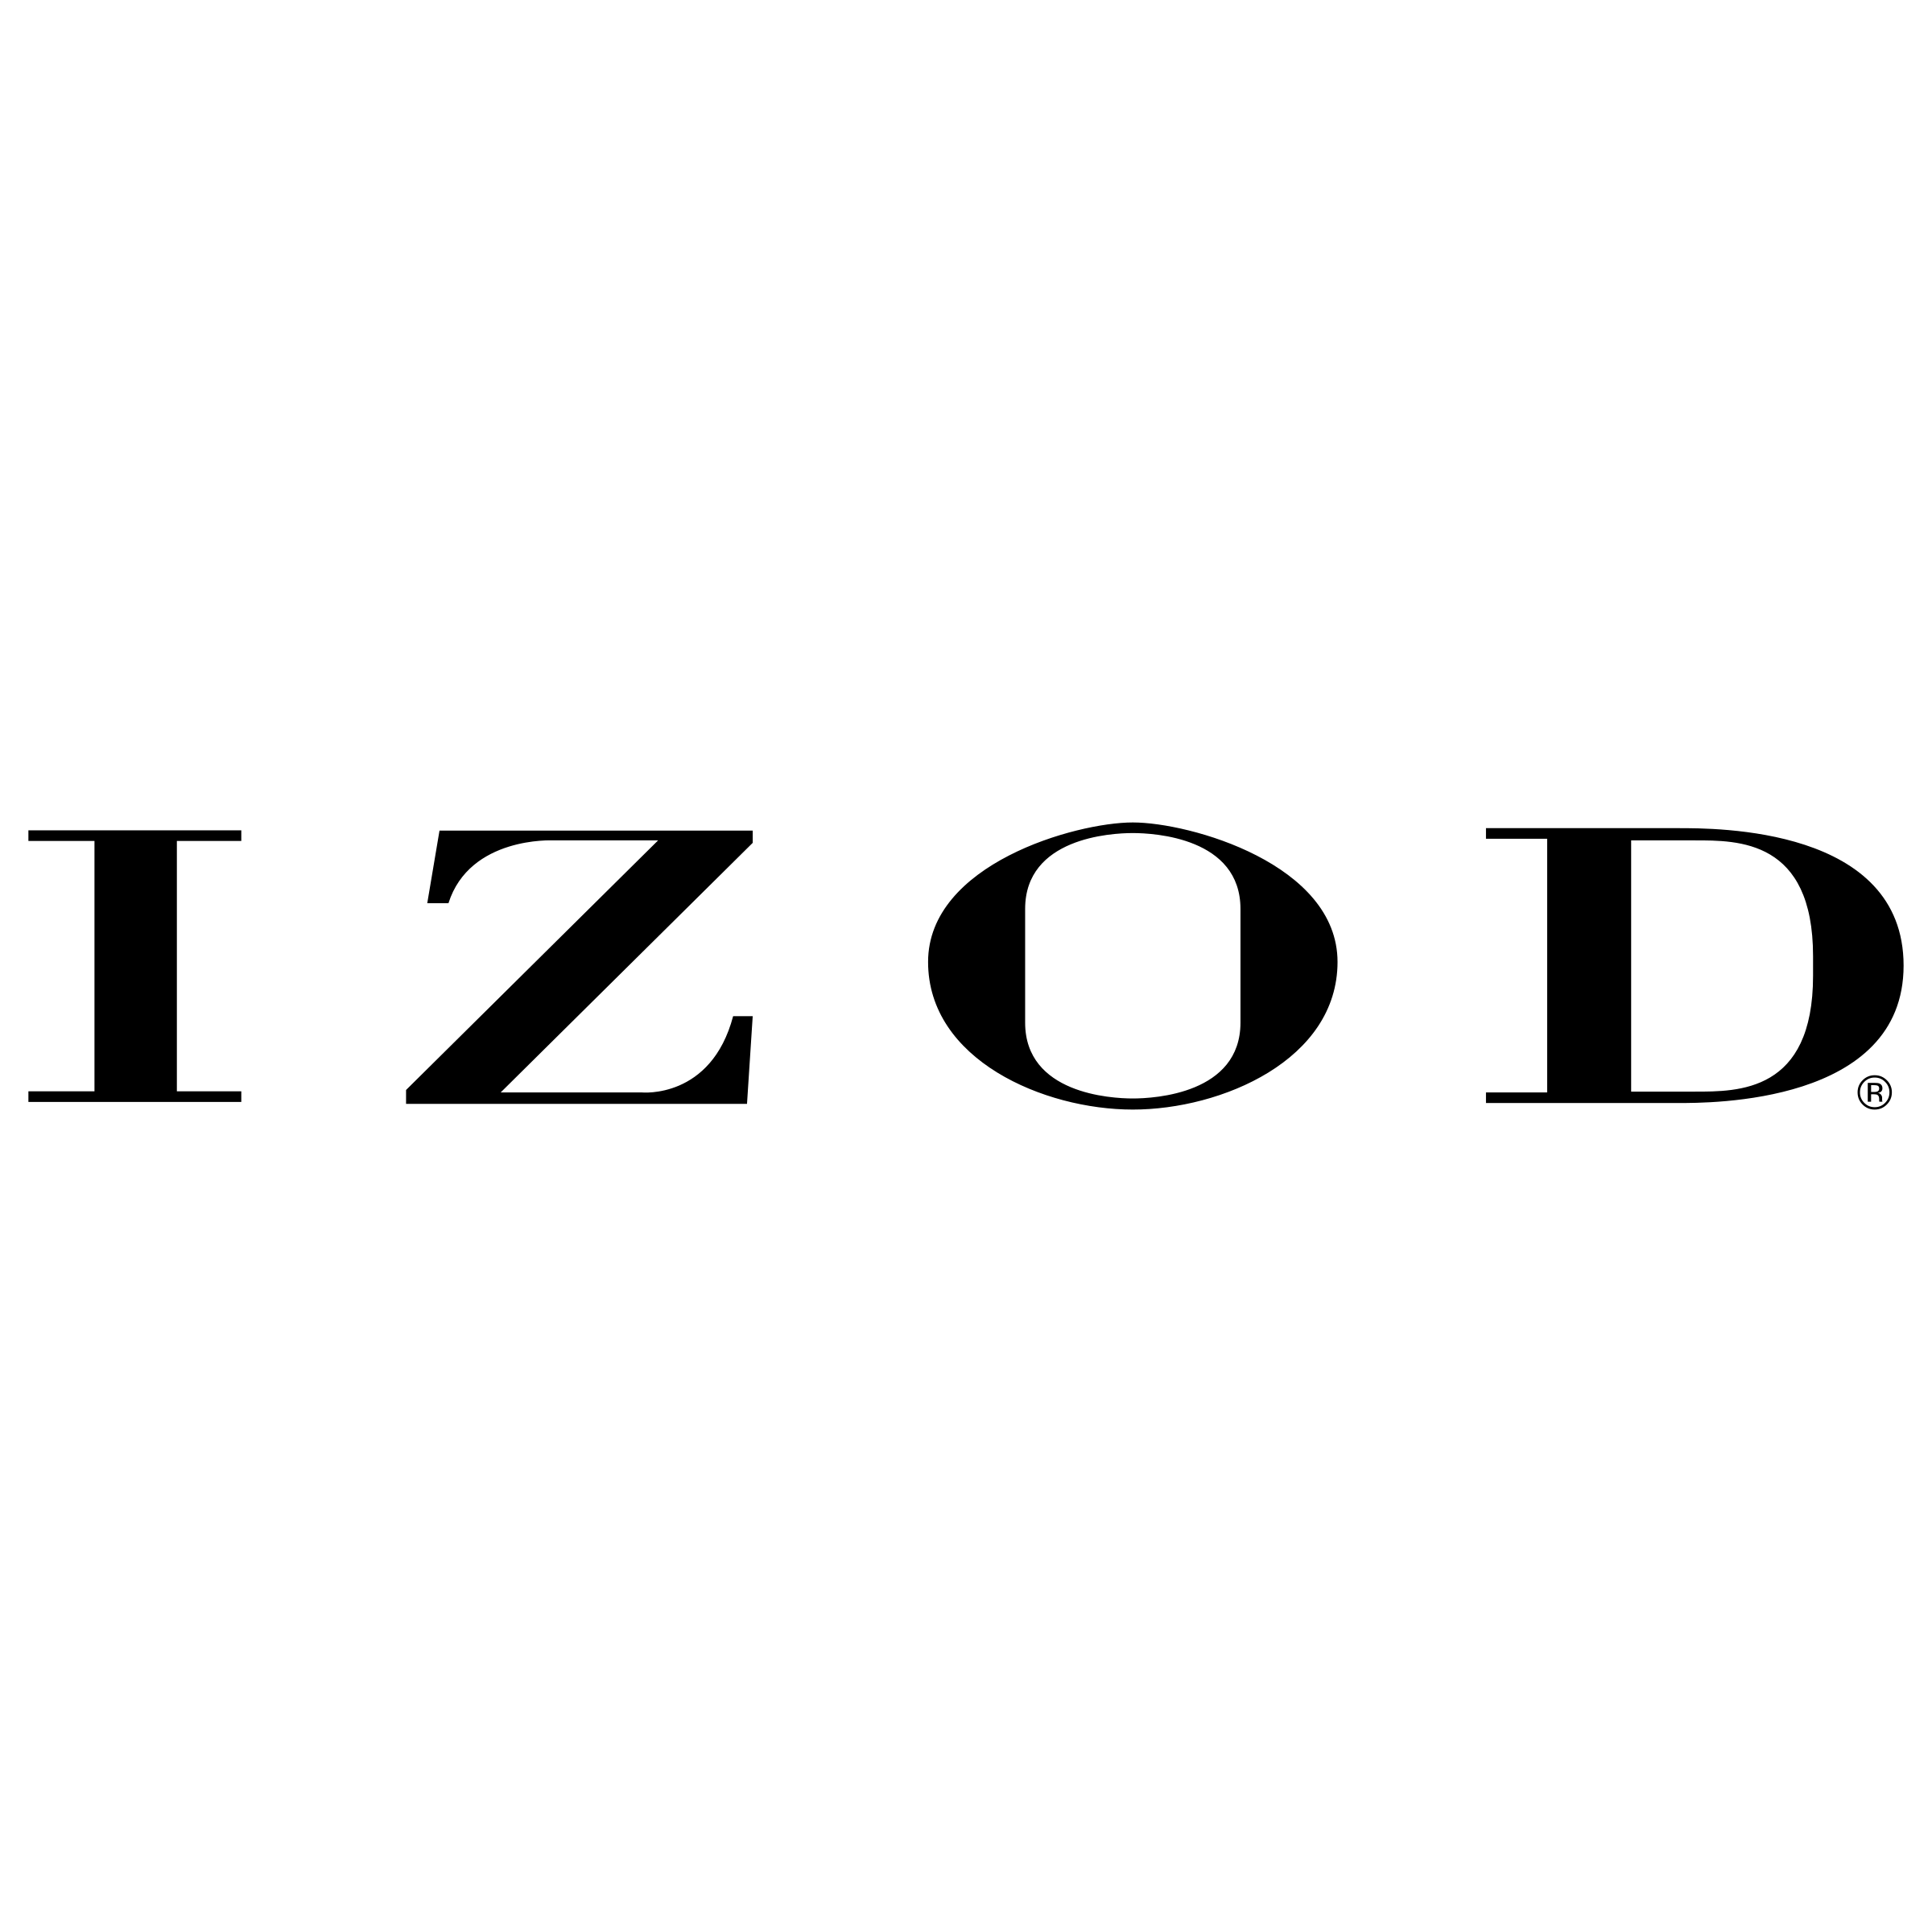 Izod Logo - Izod Logo PNG Transparent & SVG Vector - Freebie Supply